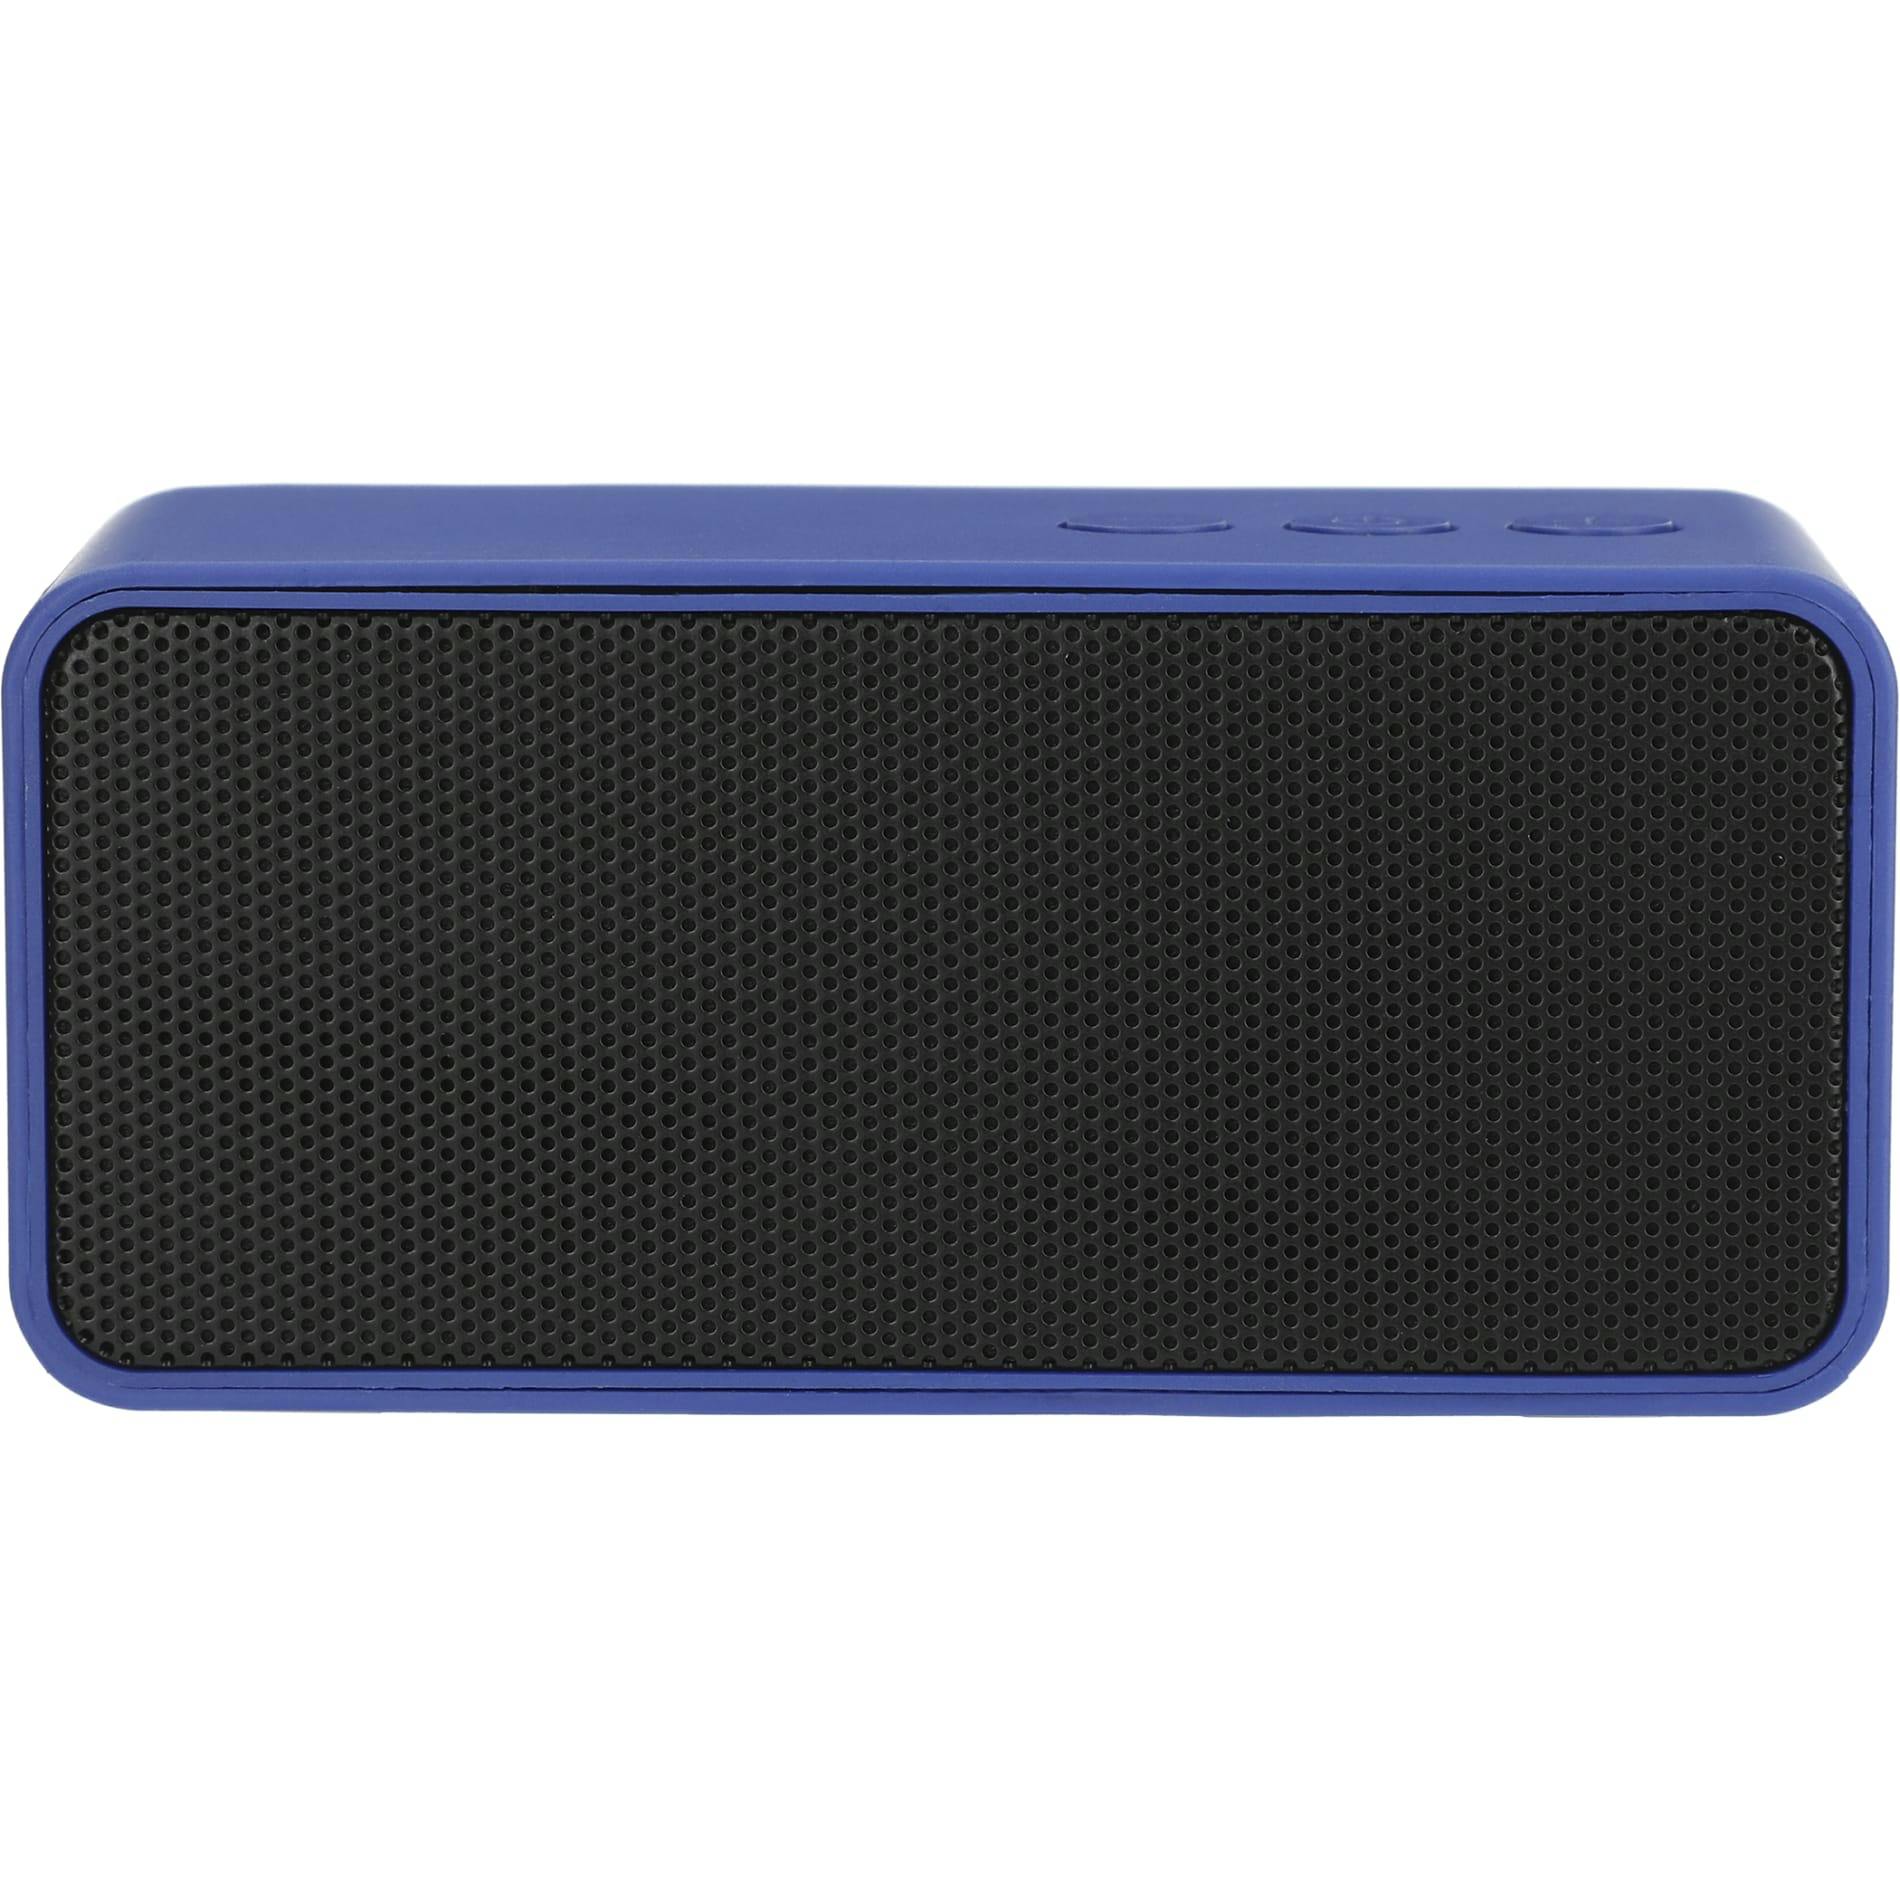 Stark Bluetooth Speaker - additional Image 5